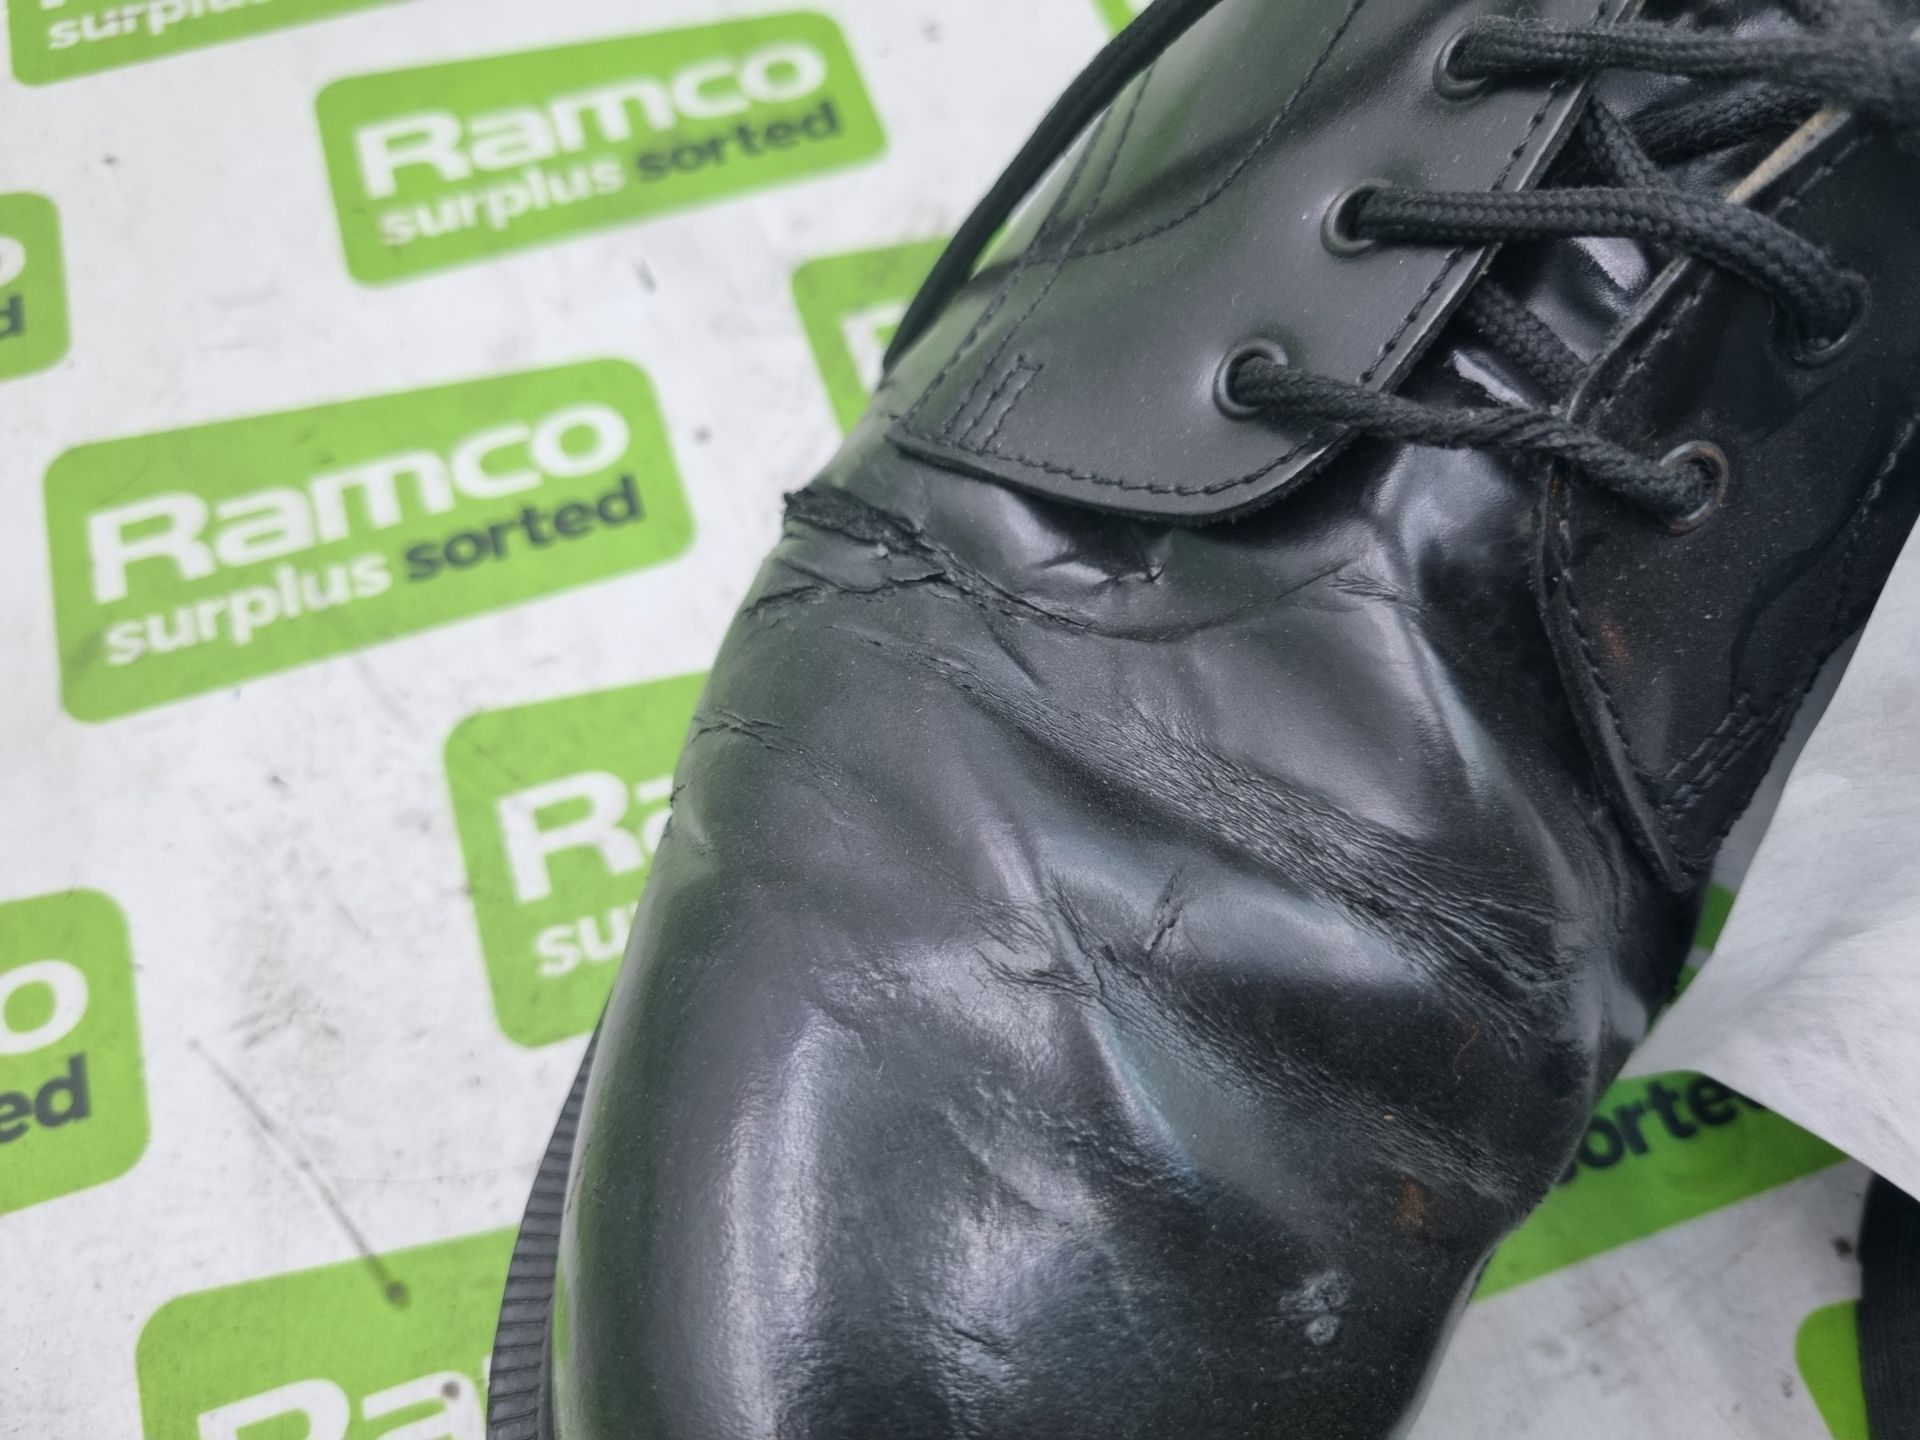 Solovair Black Leather Shoes 'Postman Style' Pair - Size EU 44, UK 9.5 - 30x25x15cm - Image 4 of 4